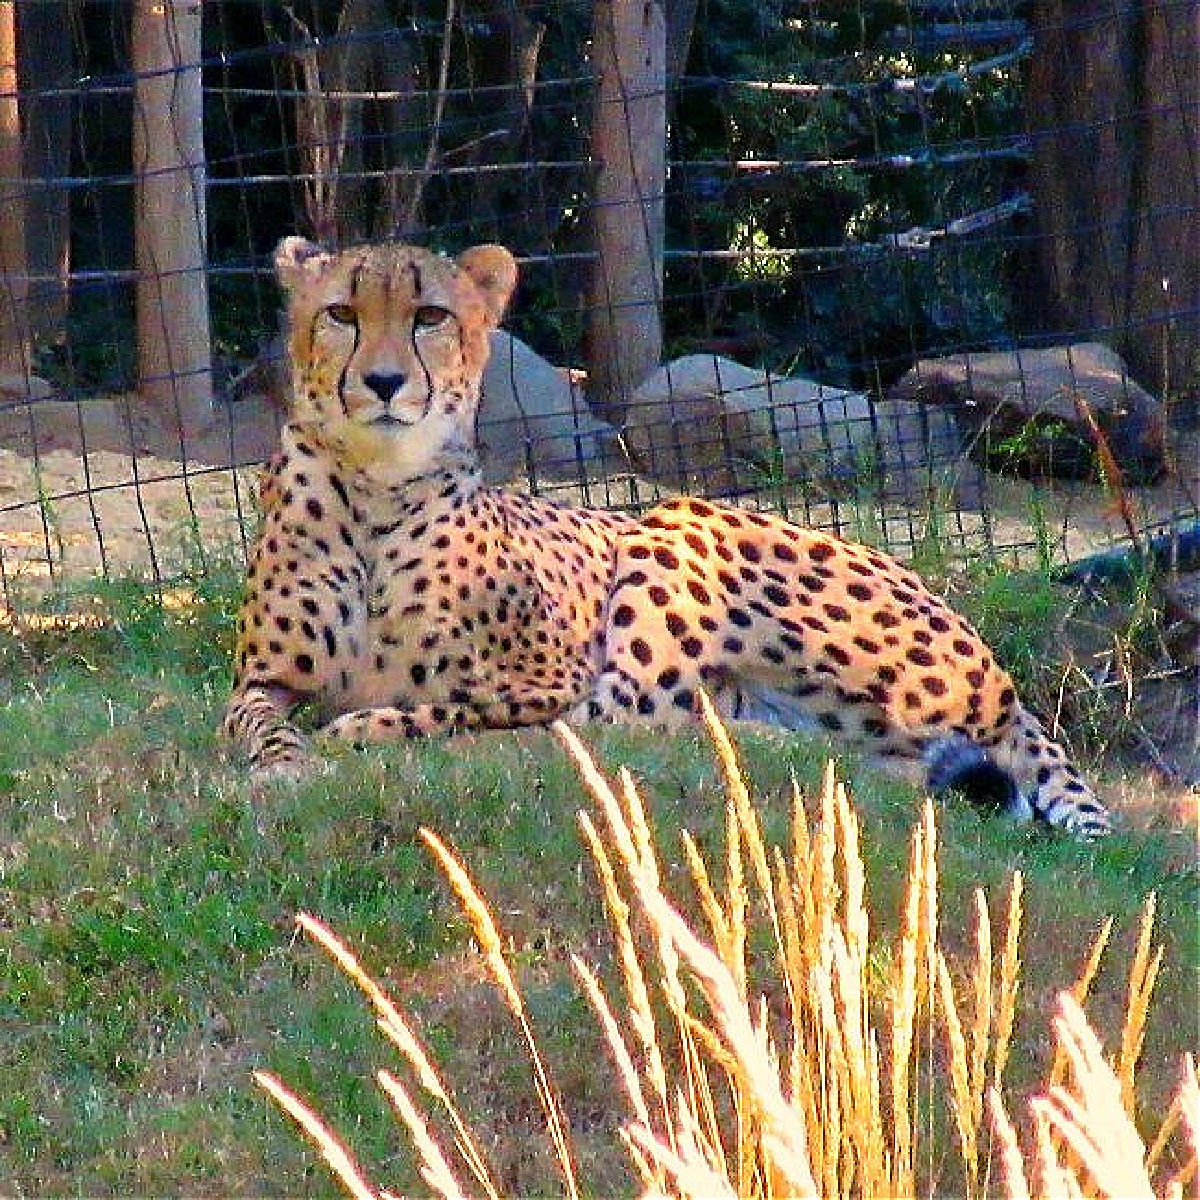 cheetah conservation station at national zoo